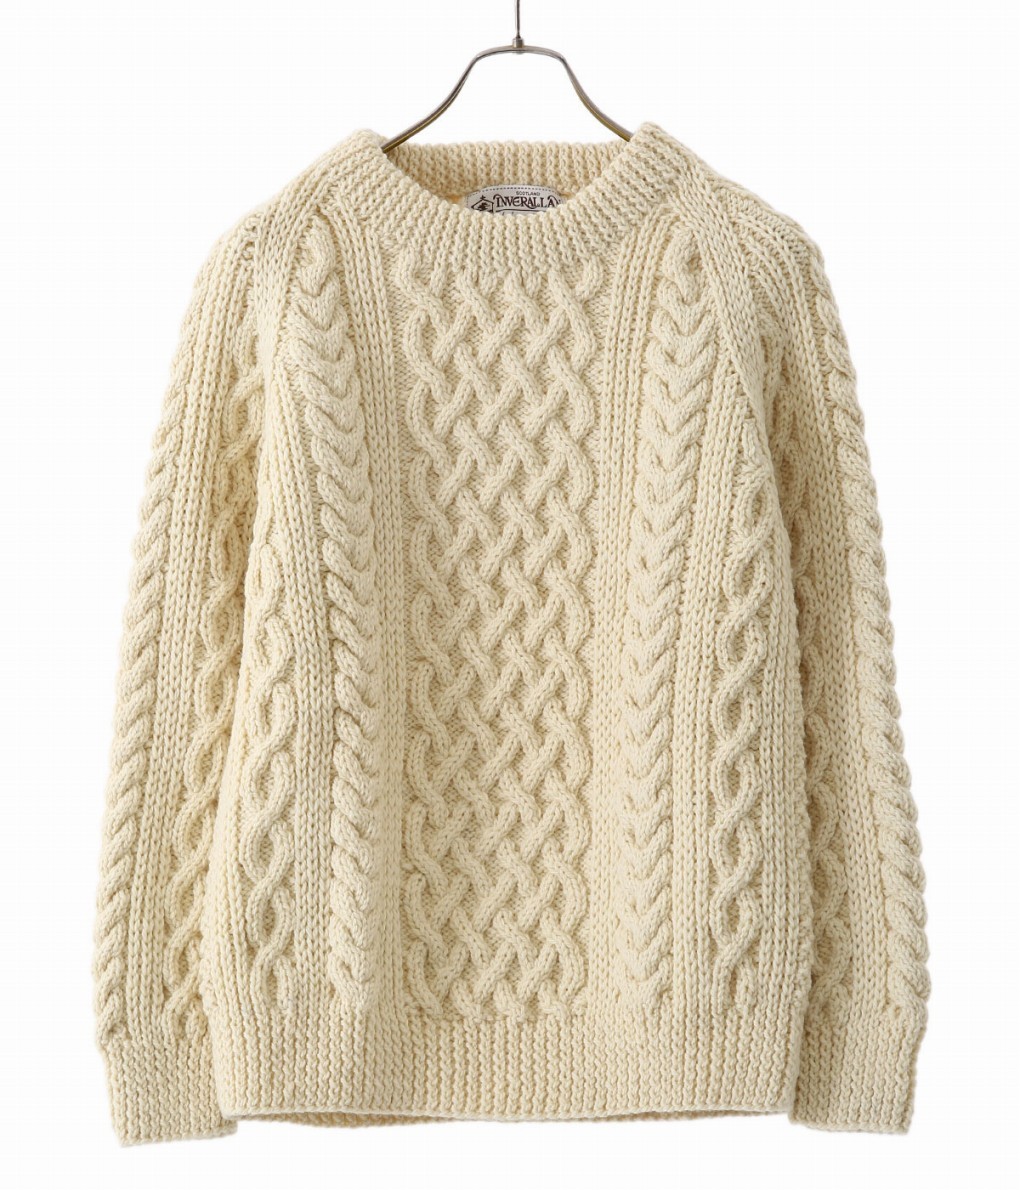 INVERALLAN / インバーアラン : Crewneck Sweater (Size 40.42) : 1a-crewneck-40-42  ARKnets - 通販 - PayPayモール